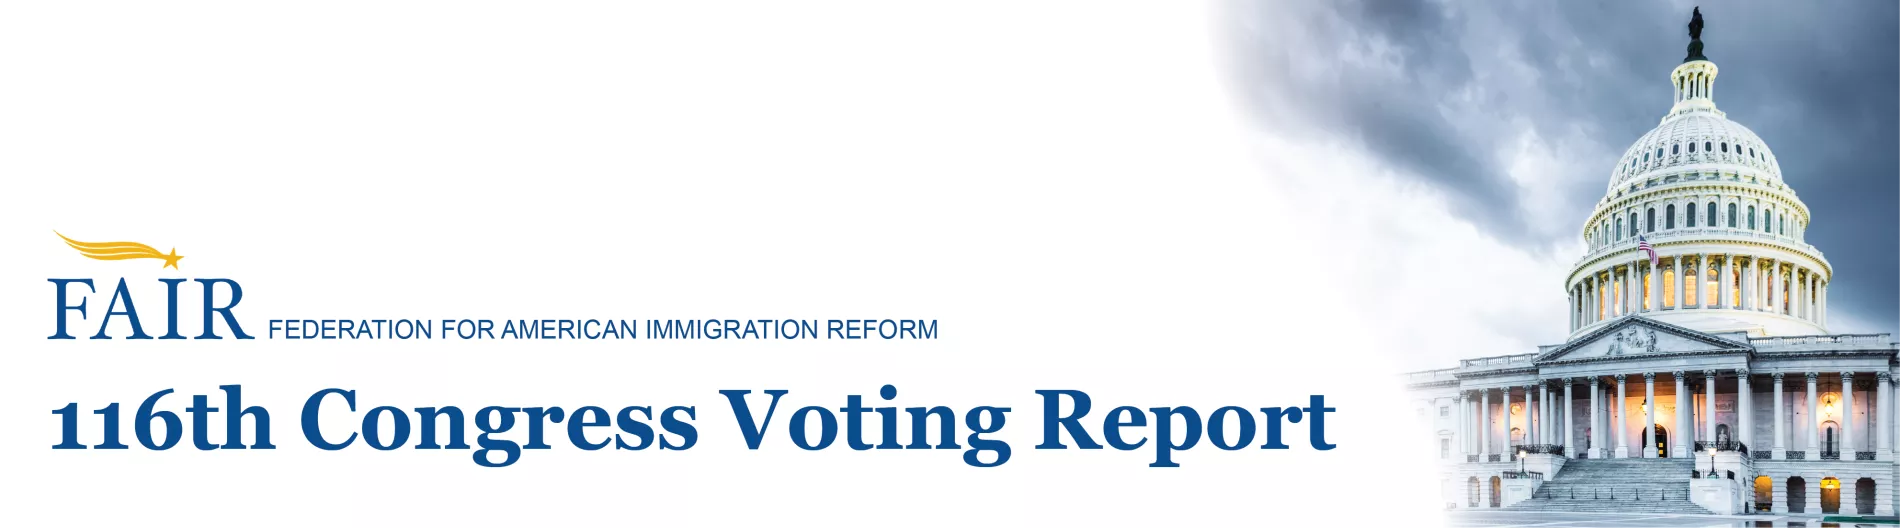 Voting Report header image